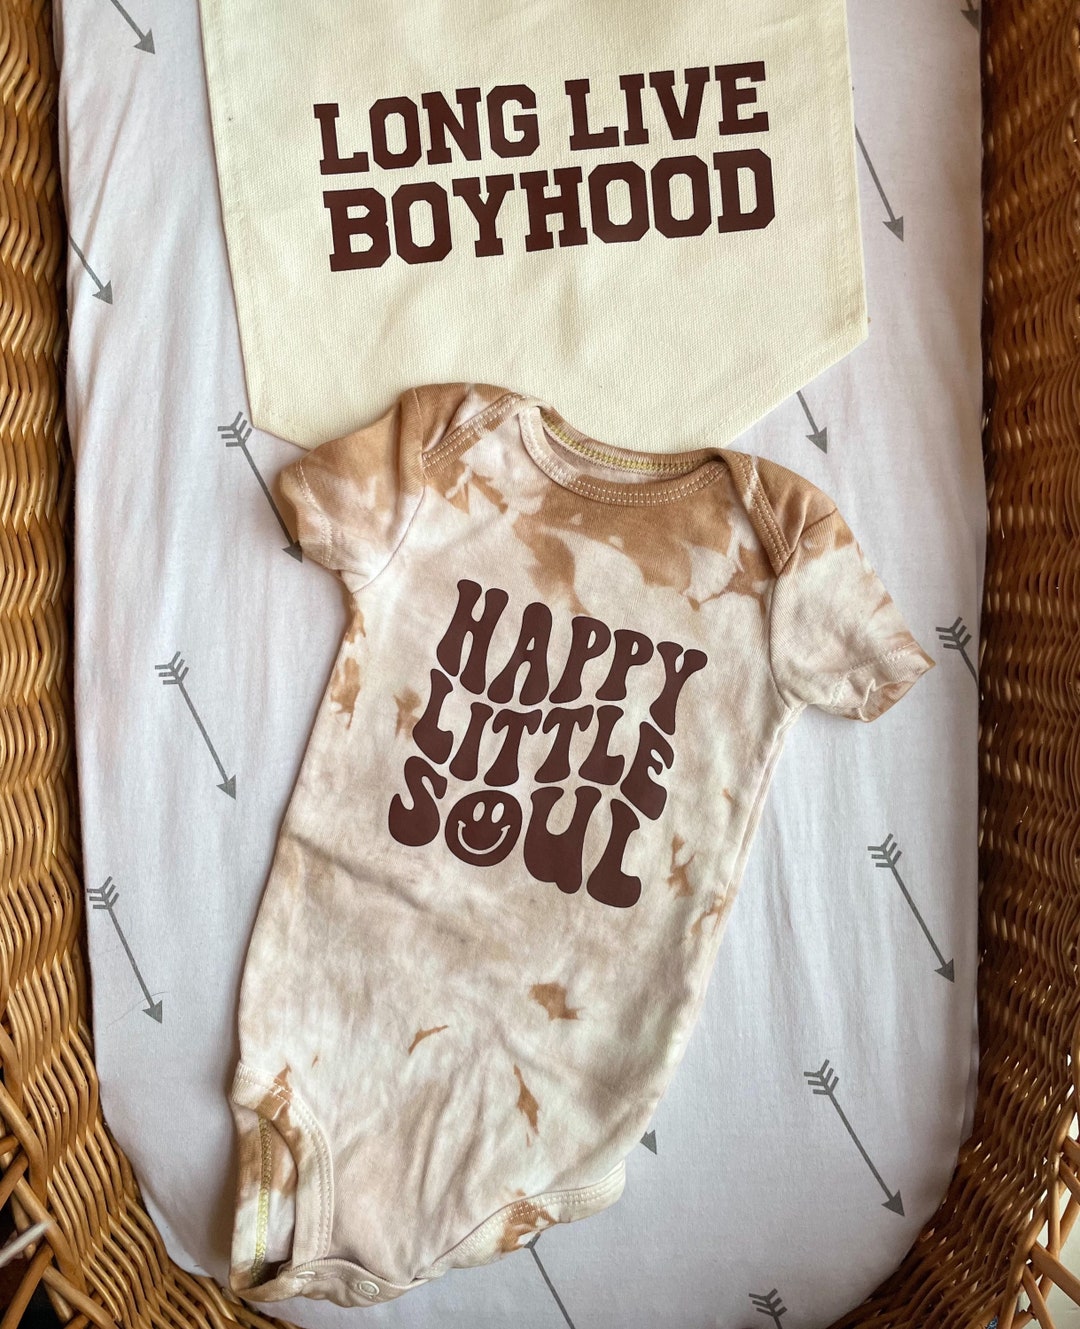 Happy Little Soul Baby Bodysuit | Boho Baby Bodysuit | Hippie Baby, Retro Baby | Trendy Baby Outfit | Neutral Baby | Baby Shower Gift